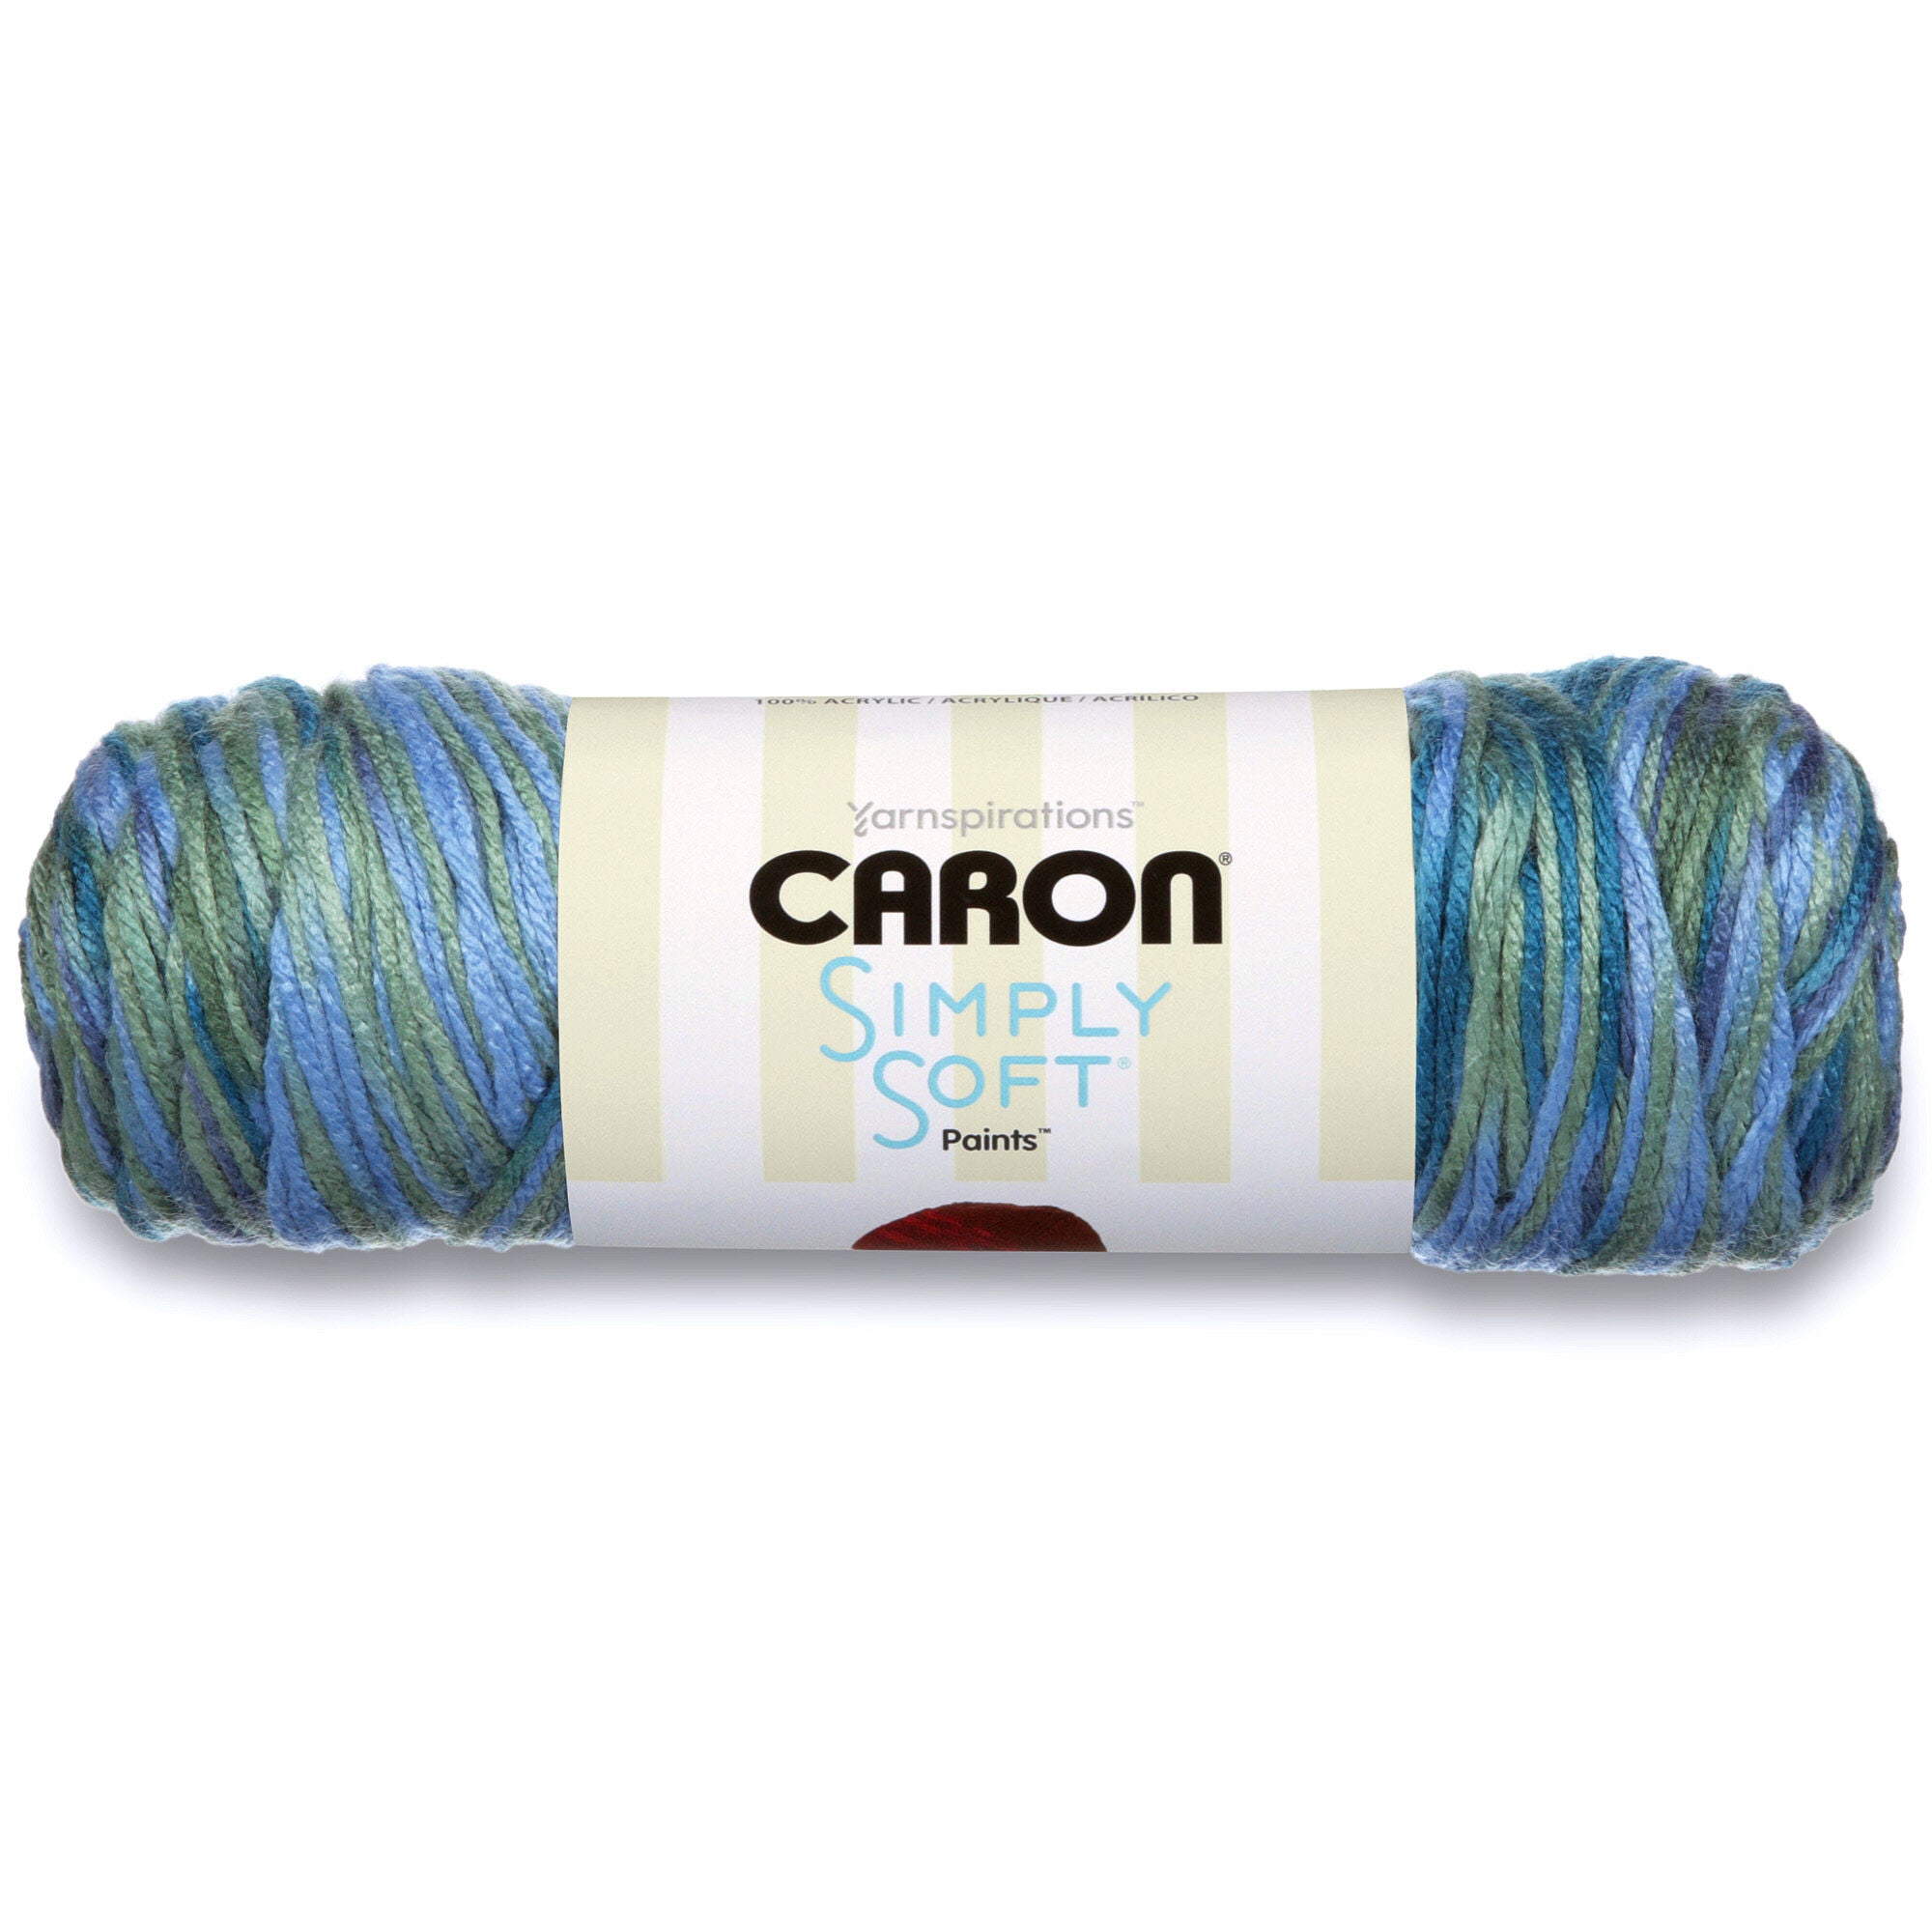 Caron Yarn | Simply Soft Paints, Large 5 Oz Skein in Painterly Colors Simply Soft Paints by Caron Yarn Designers Boutique